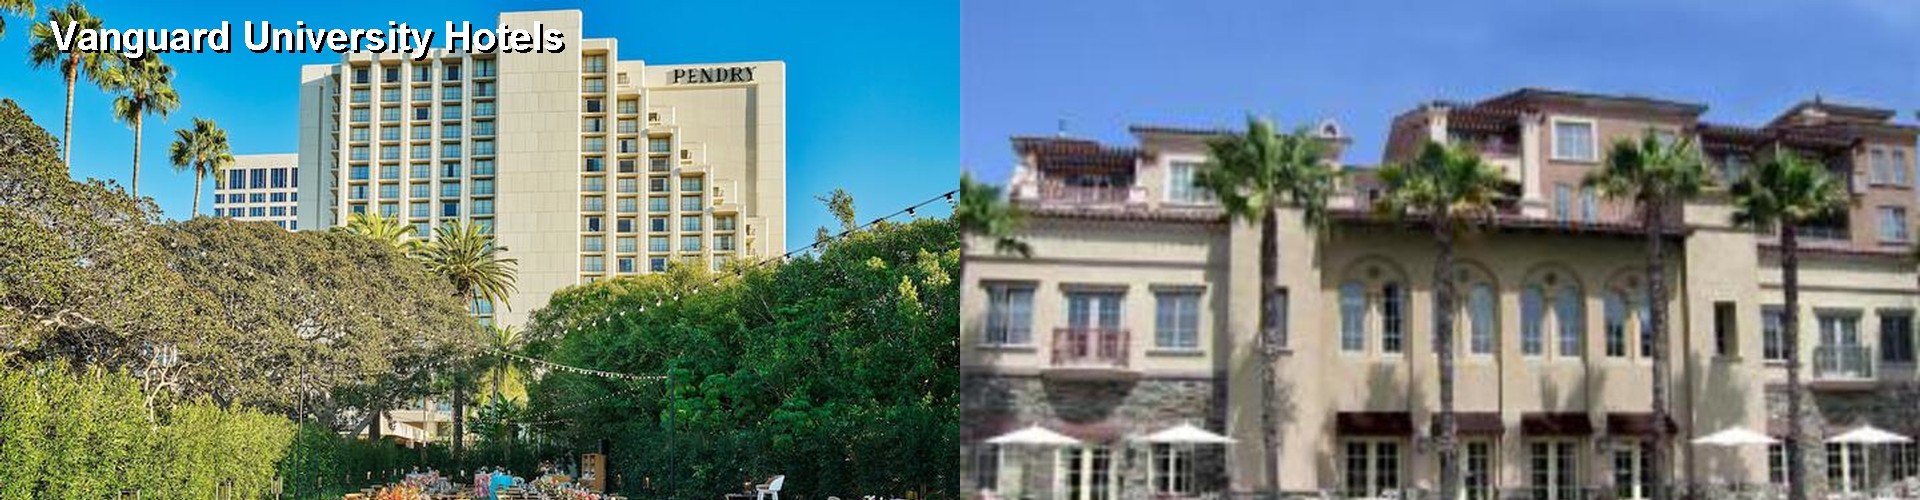 5 Best Hotels near Vanguard University